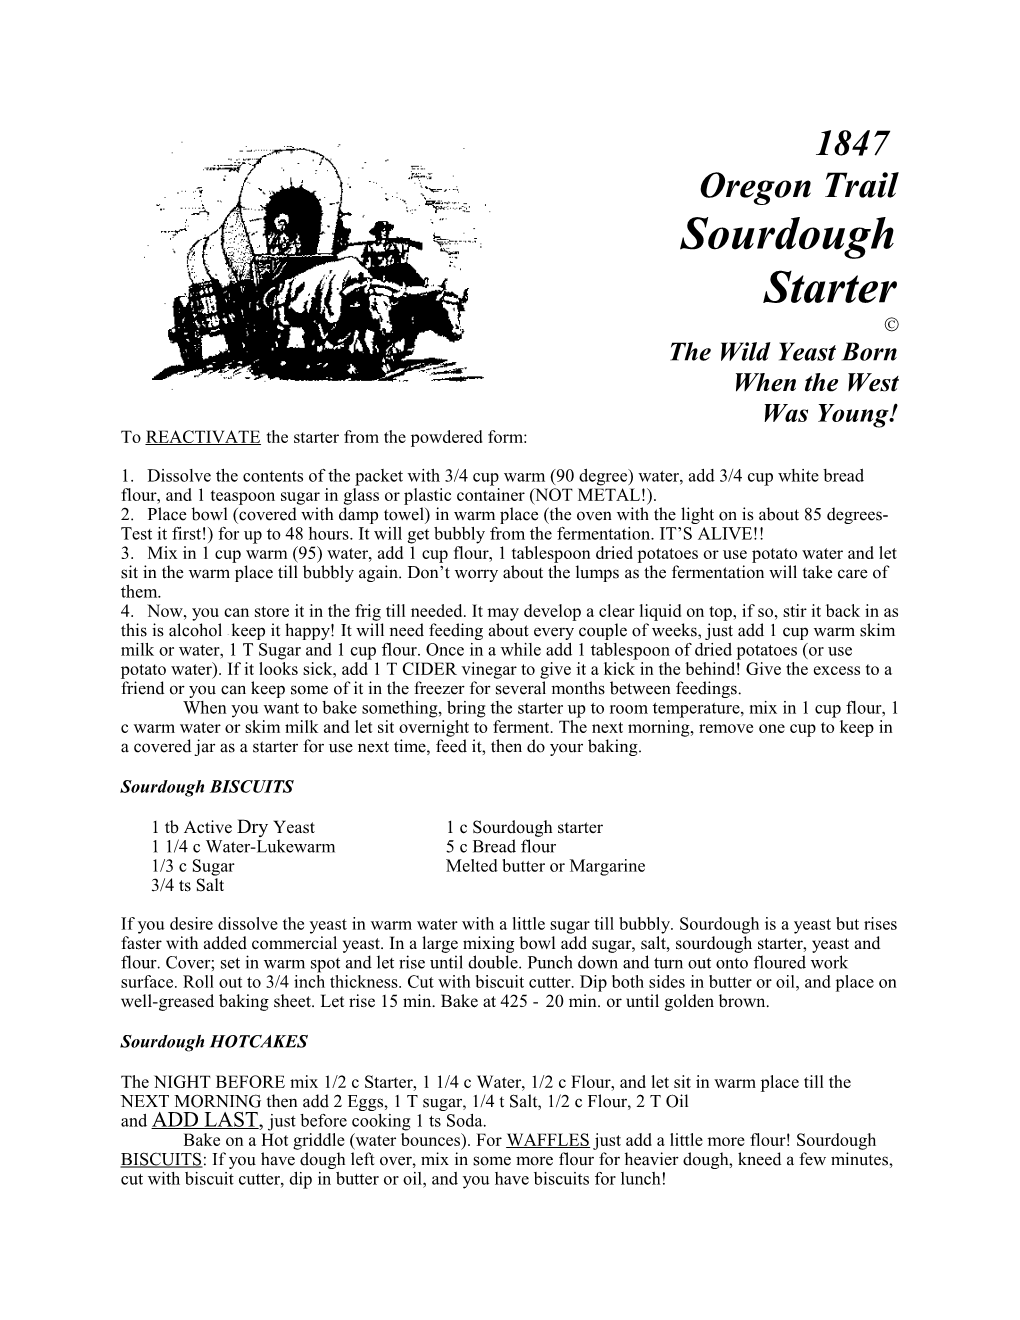 1847 Oregon Trail Sourdough Brochure